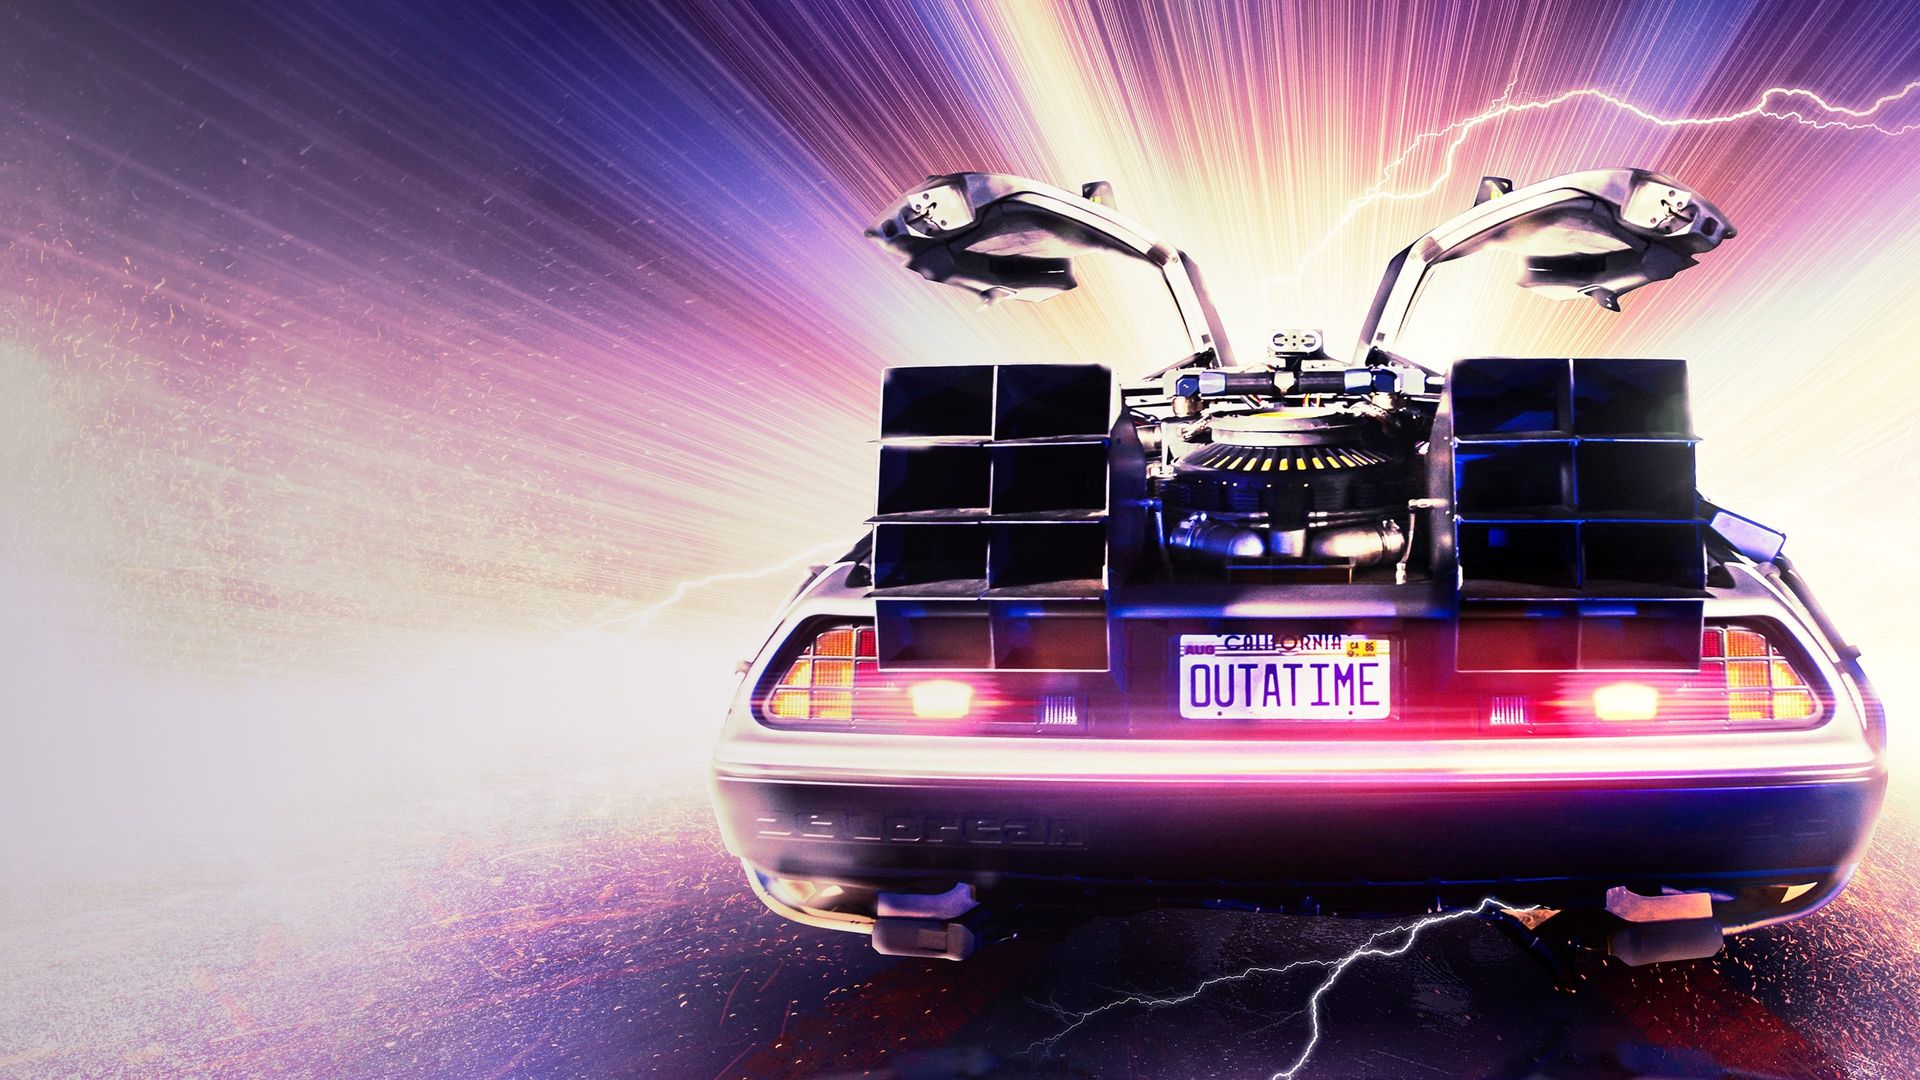 OUTATIME: Saving the DeLorean Time Machine background